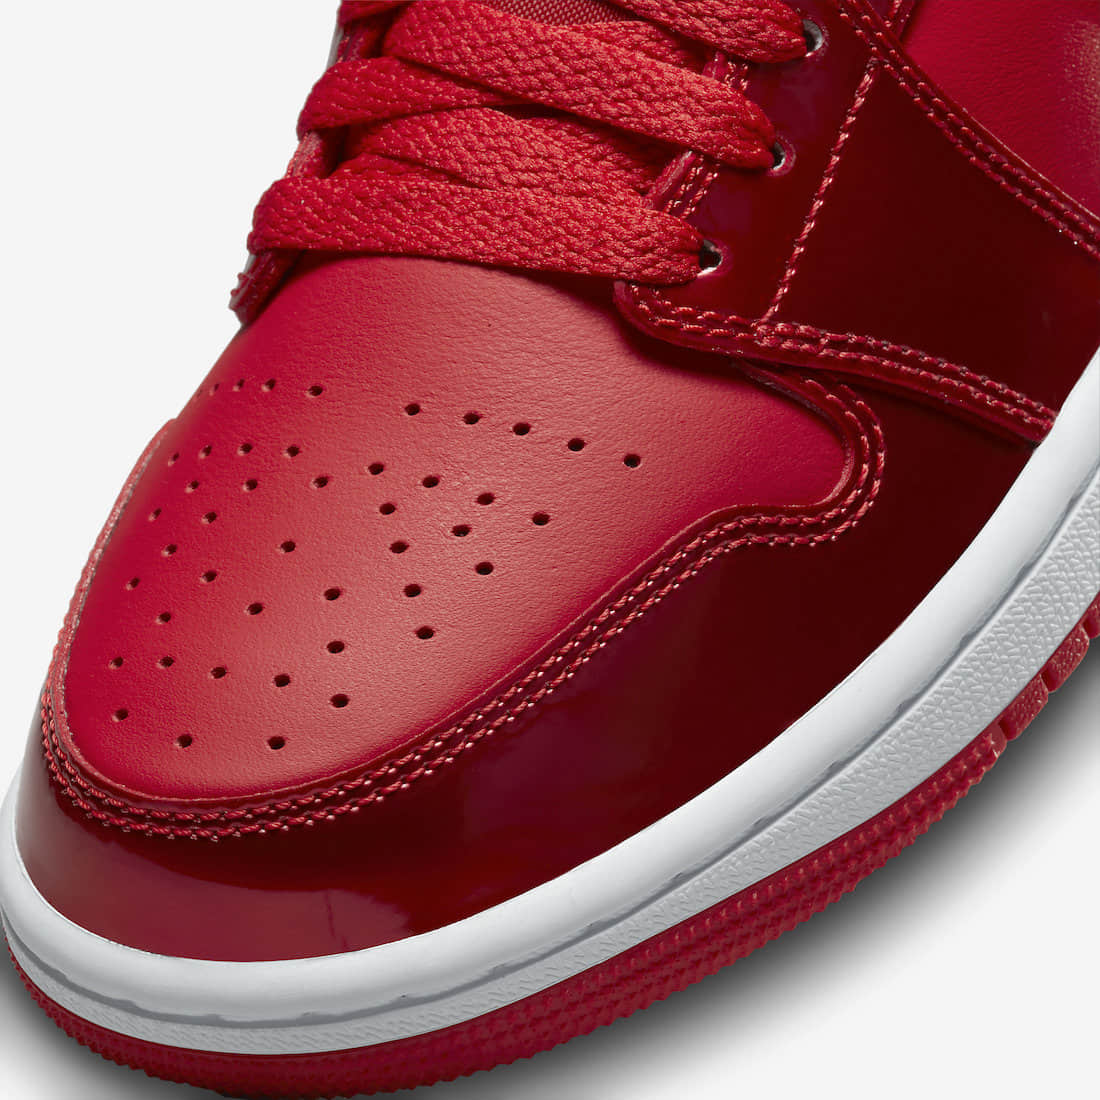 Air Jordan 1 Mid SE 'University Red Pomegranate' DH5894-600 – Stylish & Unique Sneakers